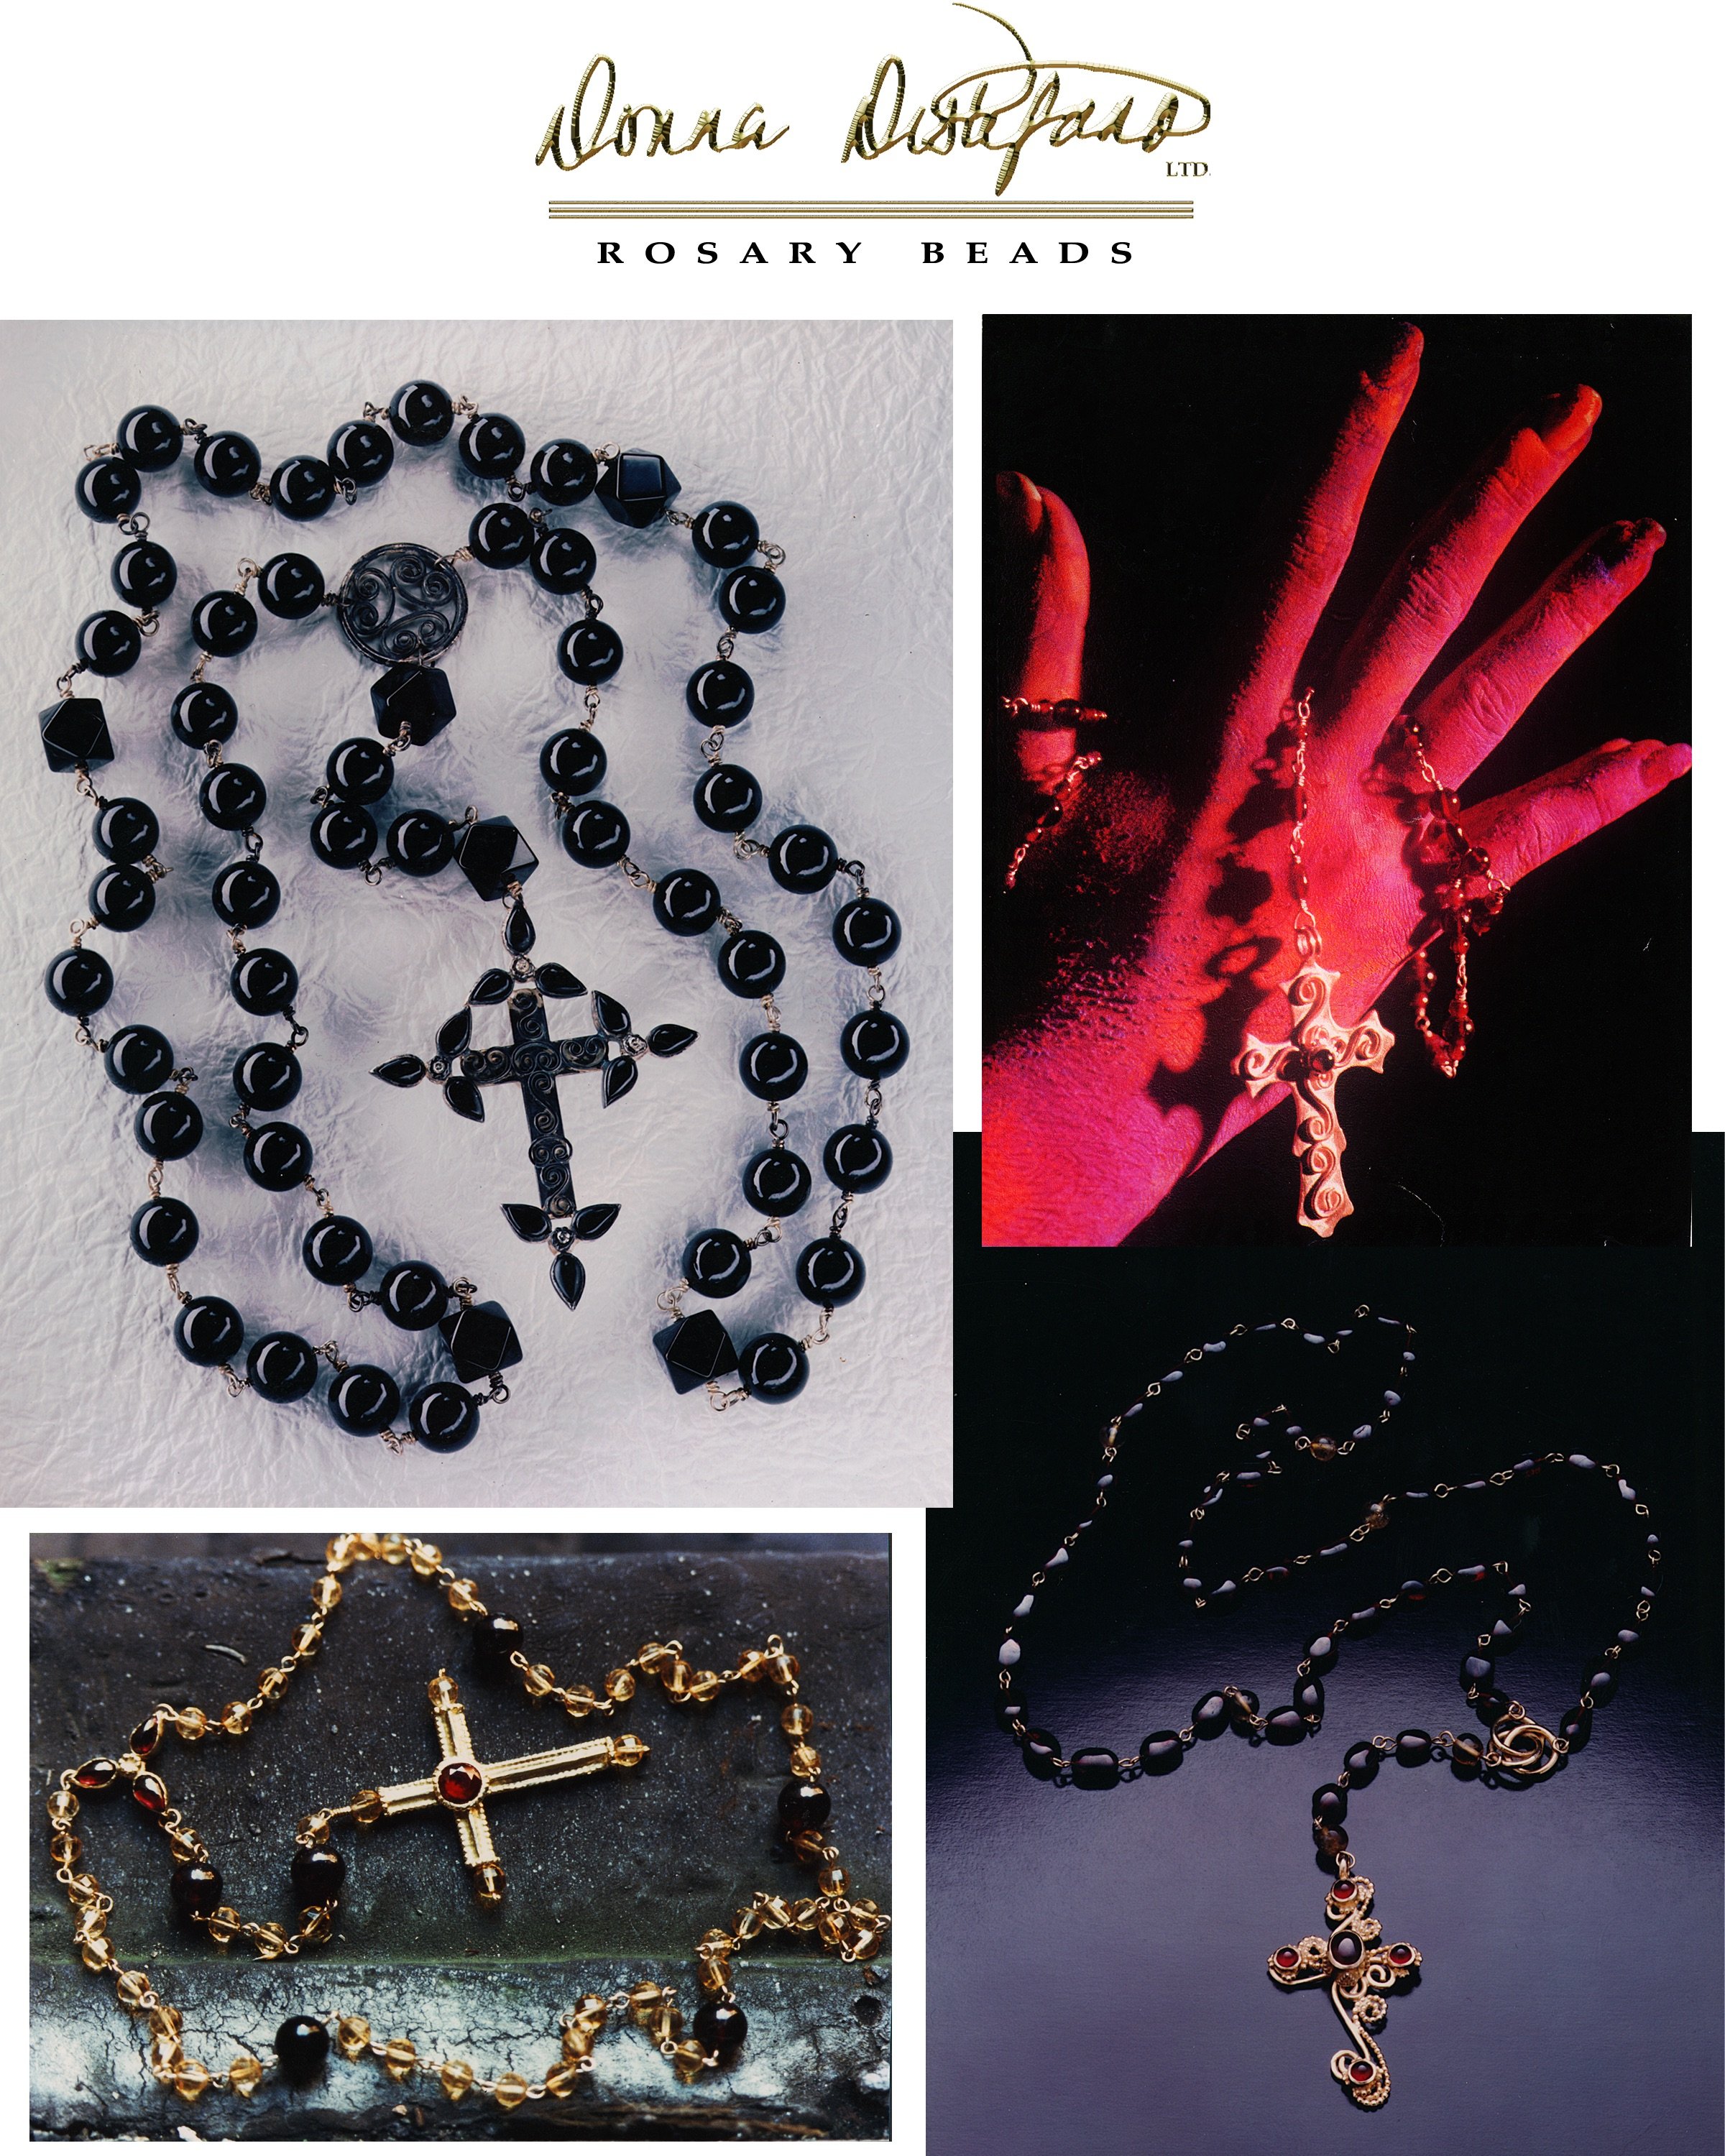 distefano Rosary beads P 2.jpeg